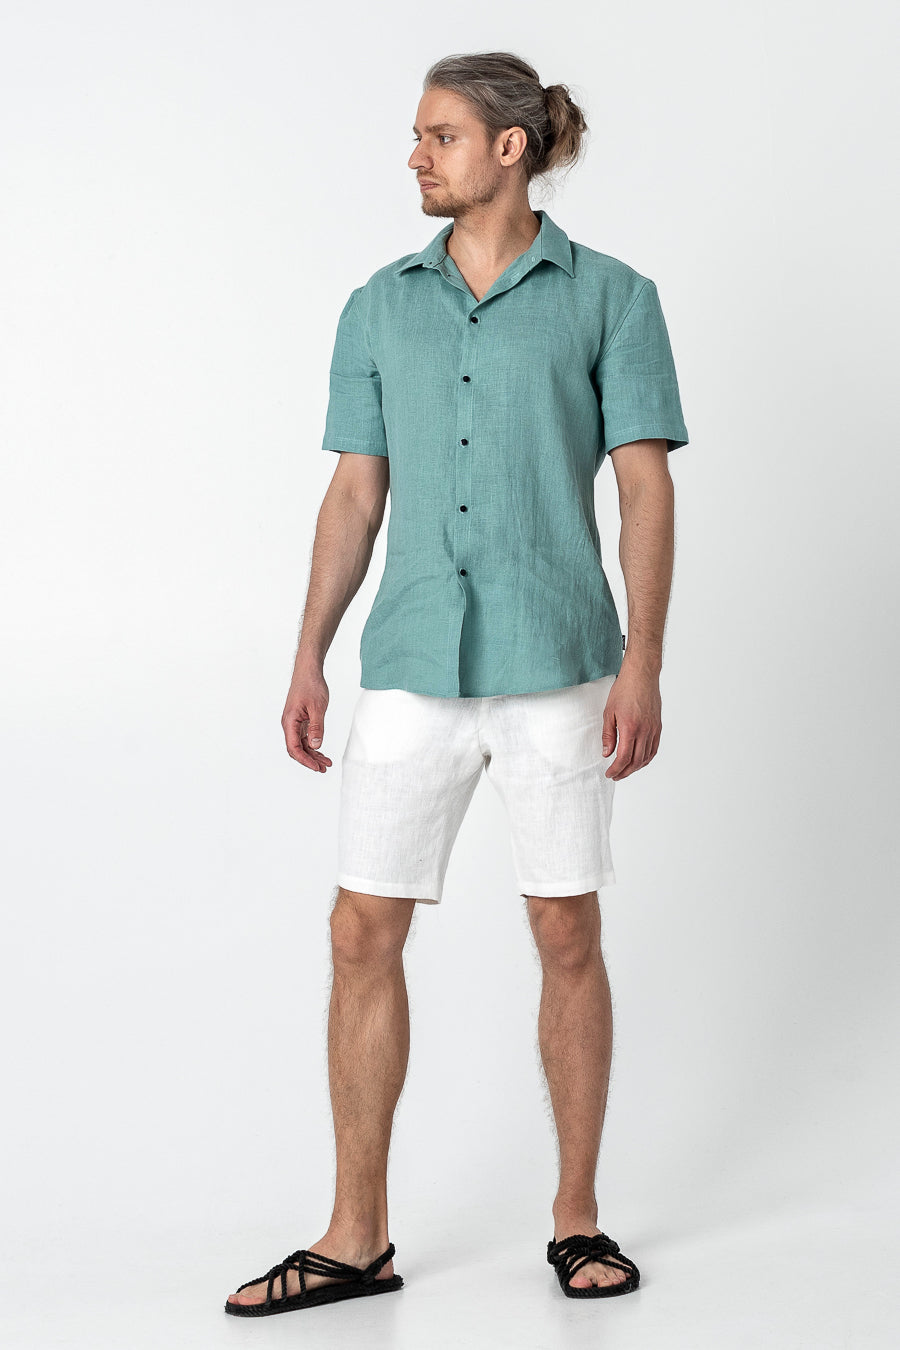 ENMEYO | Short sleeve linen dress shirt - Mezzoroni